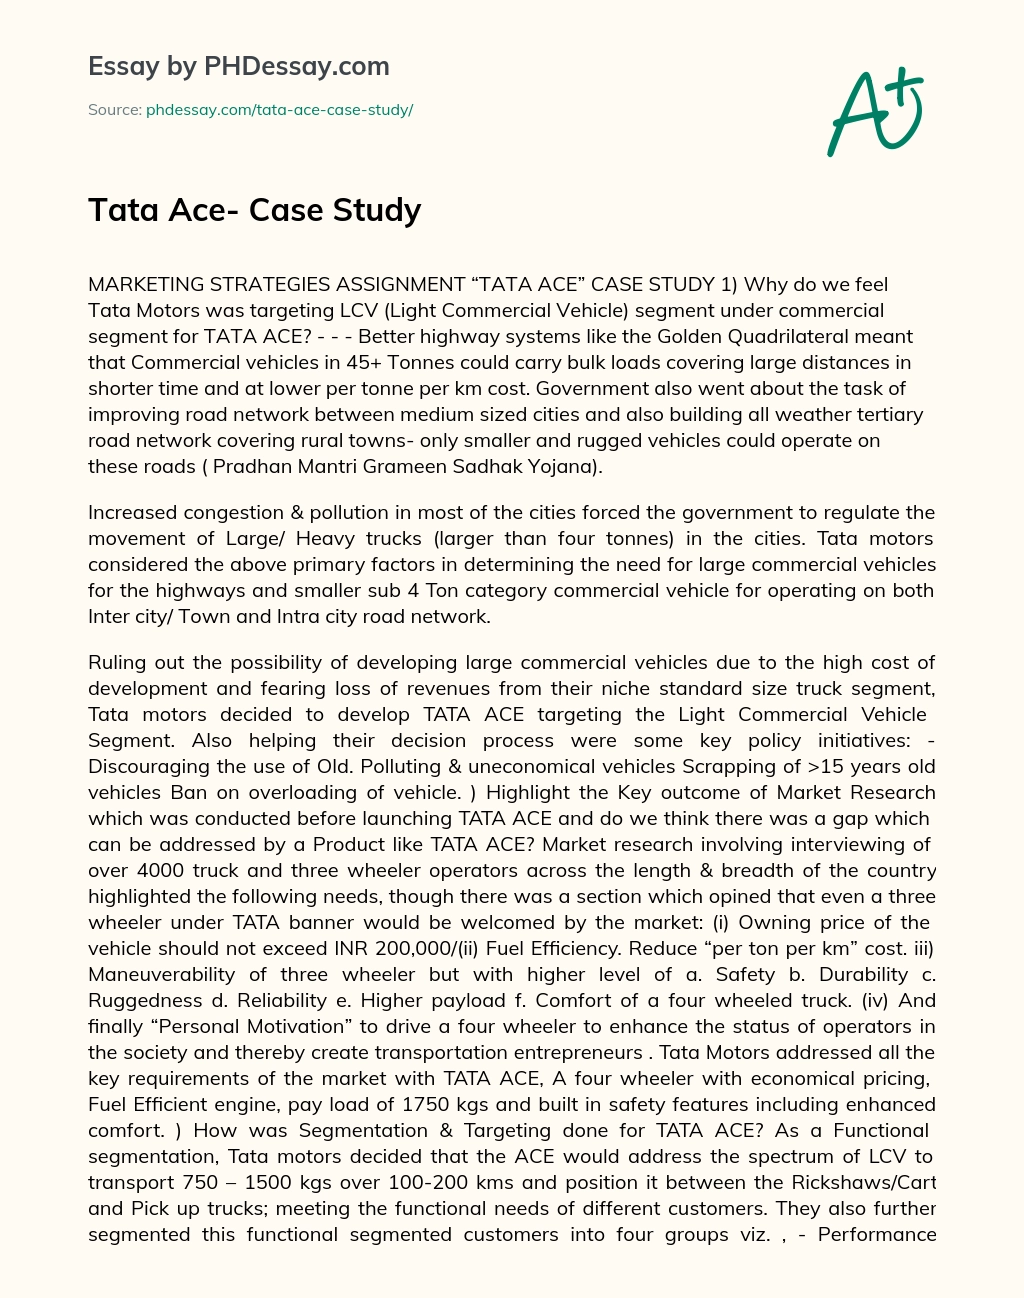 Tata Ace- Case Study essay